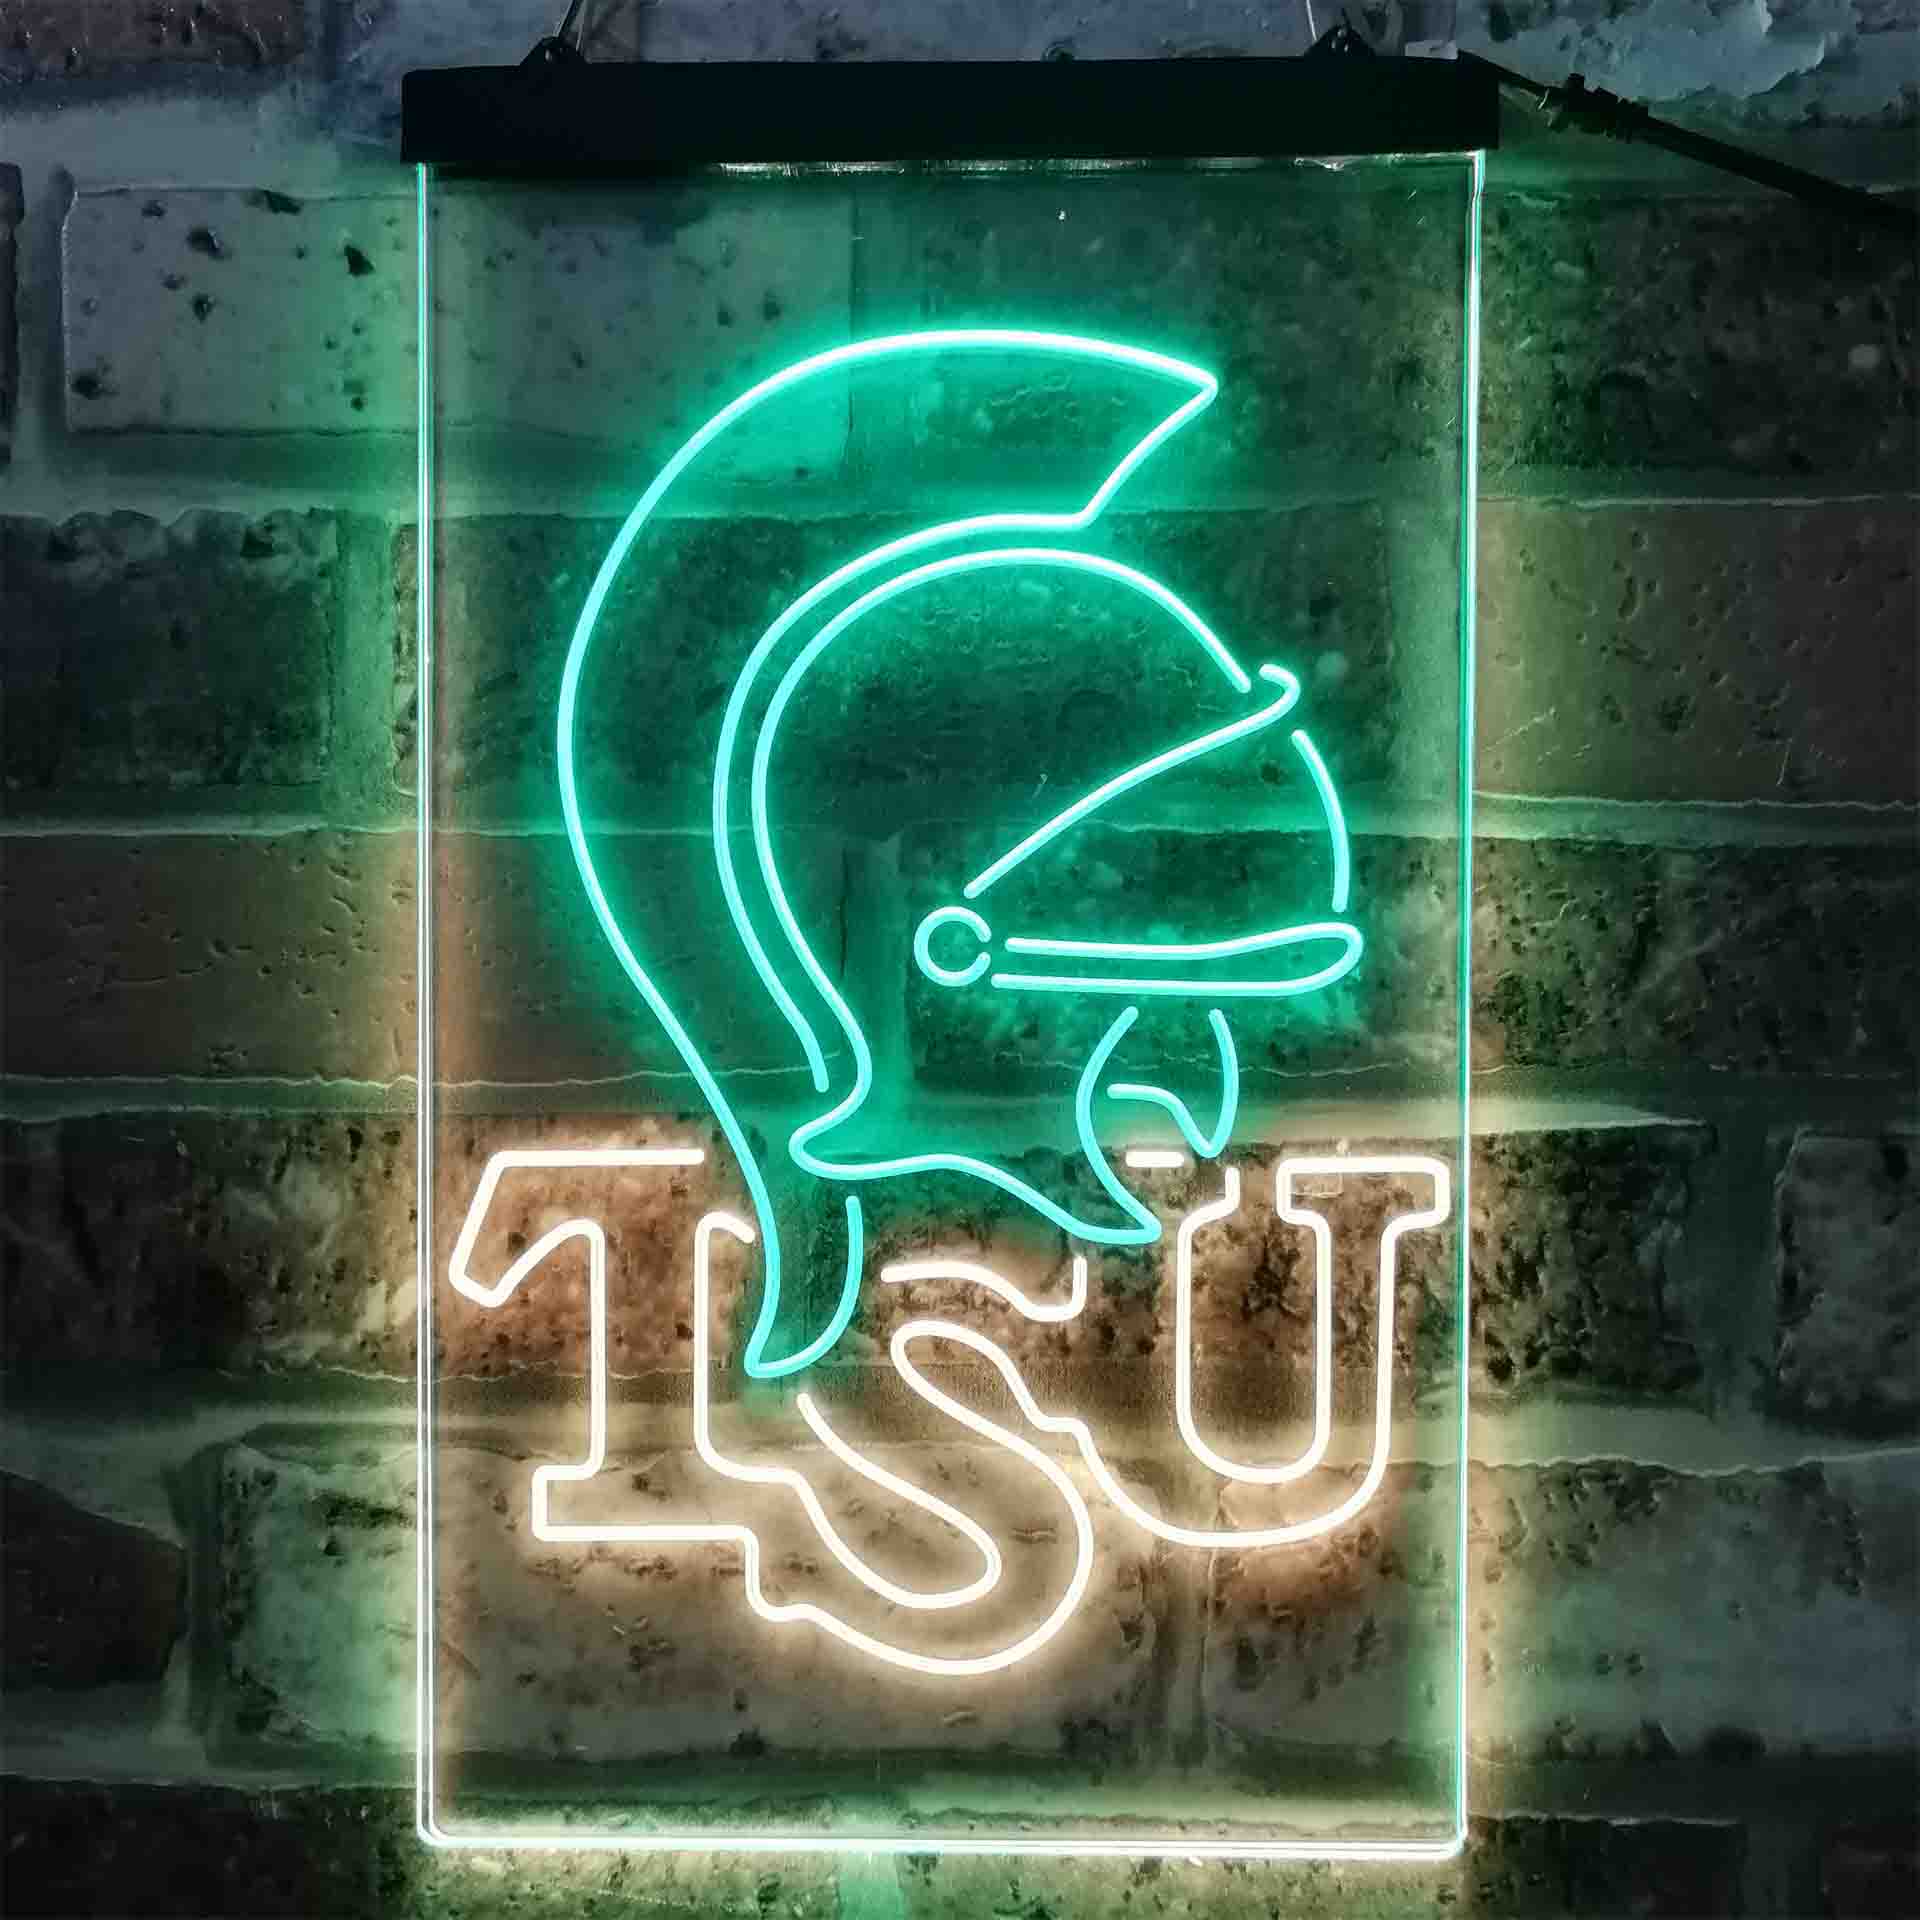 Univ. Troy Football Club Trojanss League Souvenir LED Neon Sign